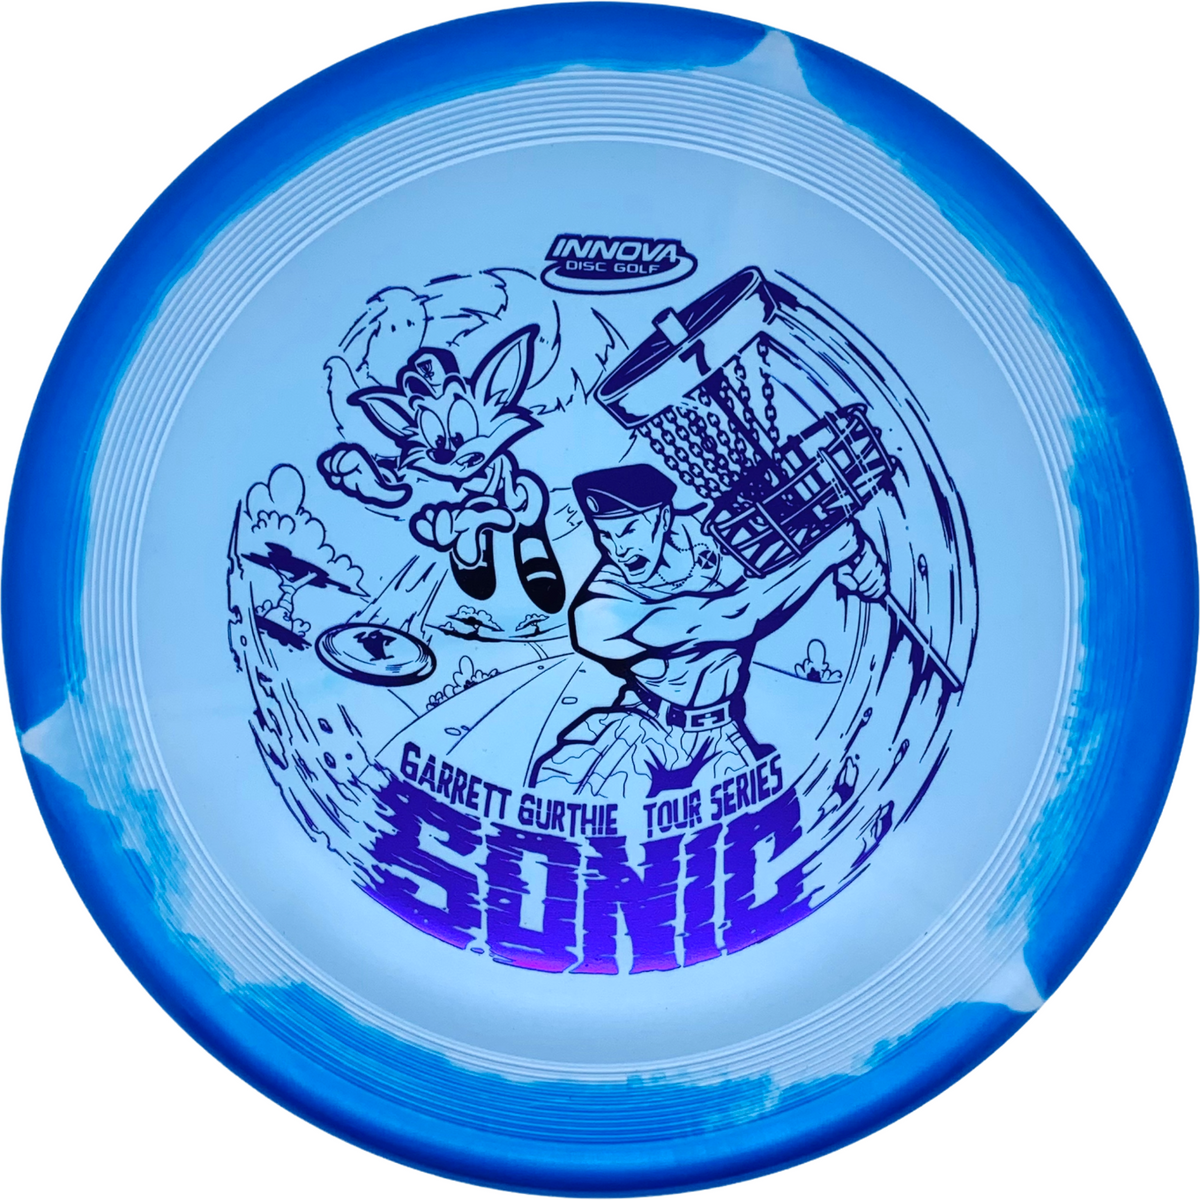 Innova Halo Star Sonic - Garrett Gurthie Tour Series 2022